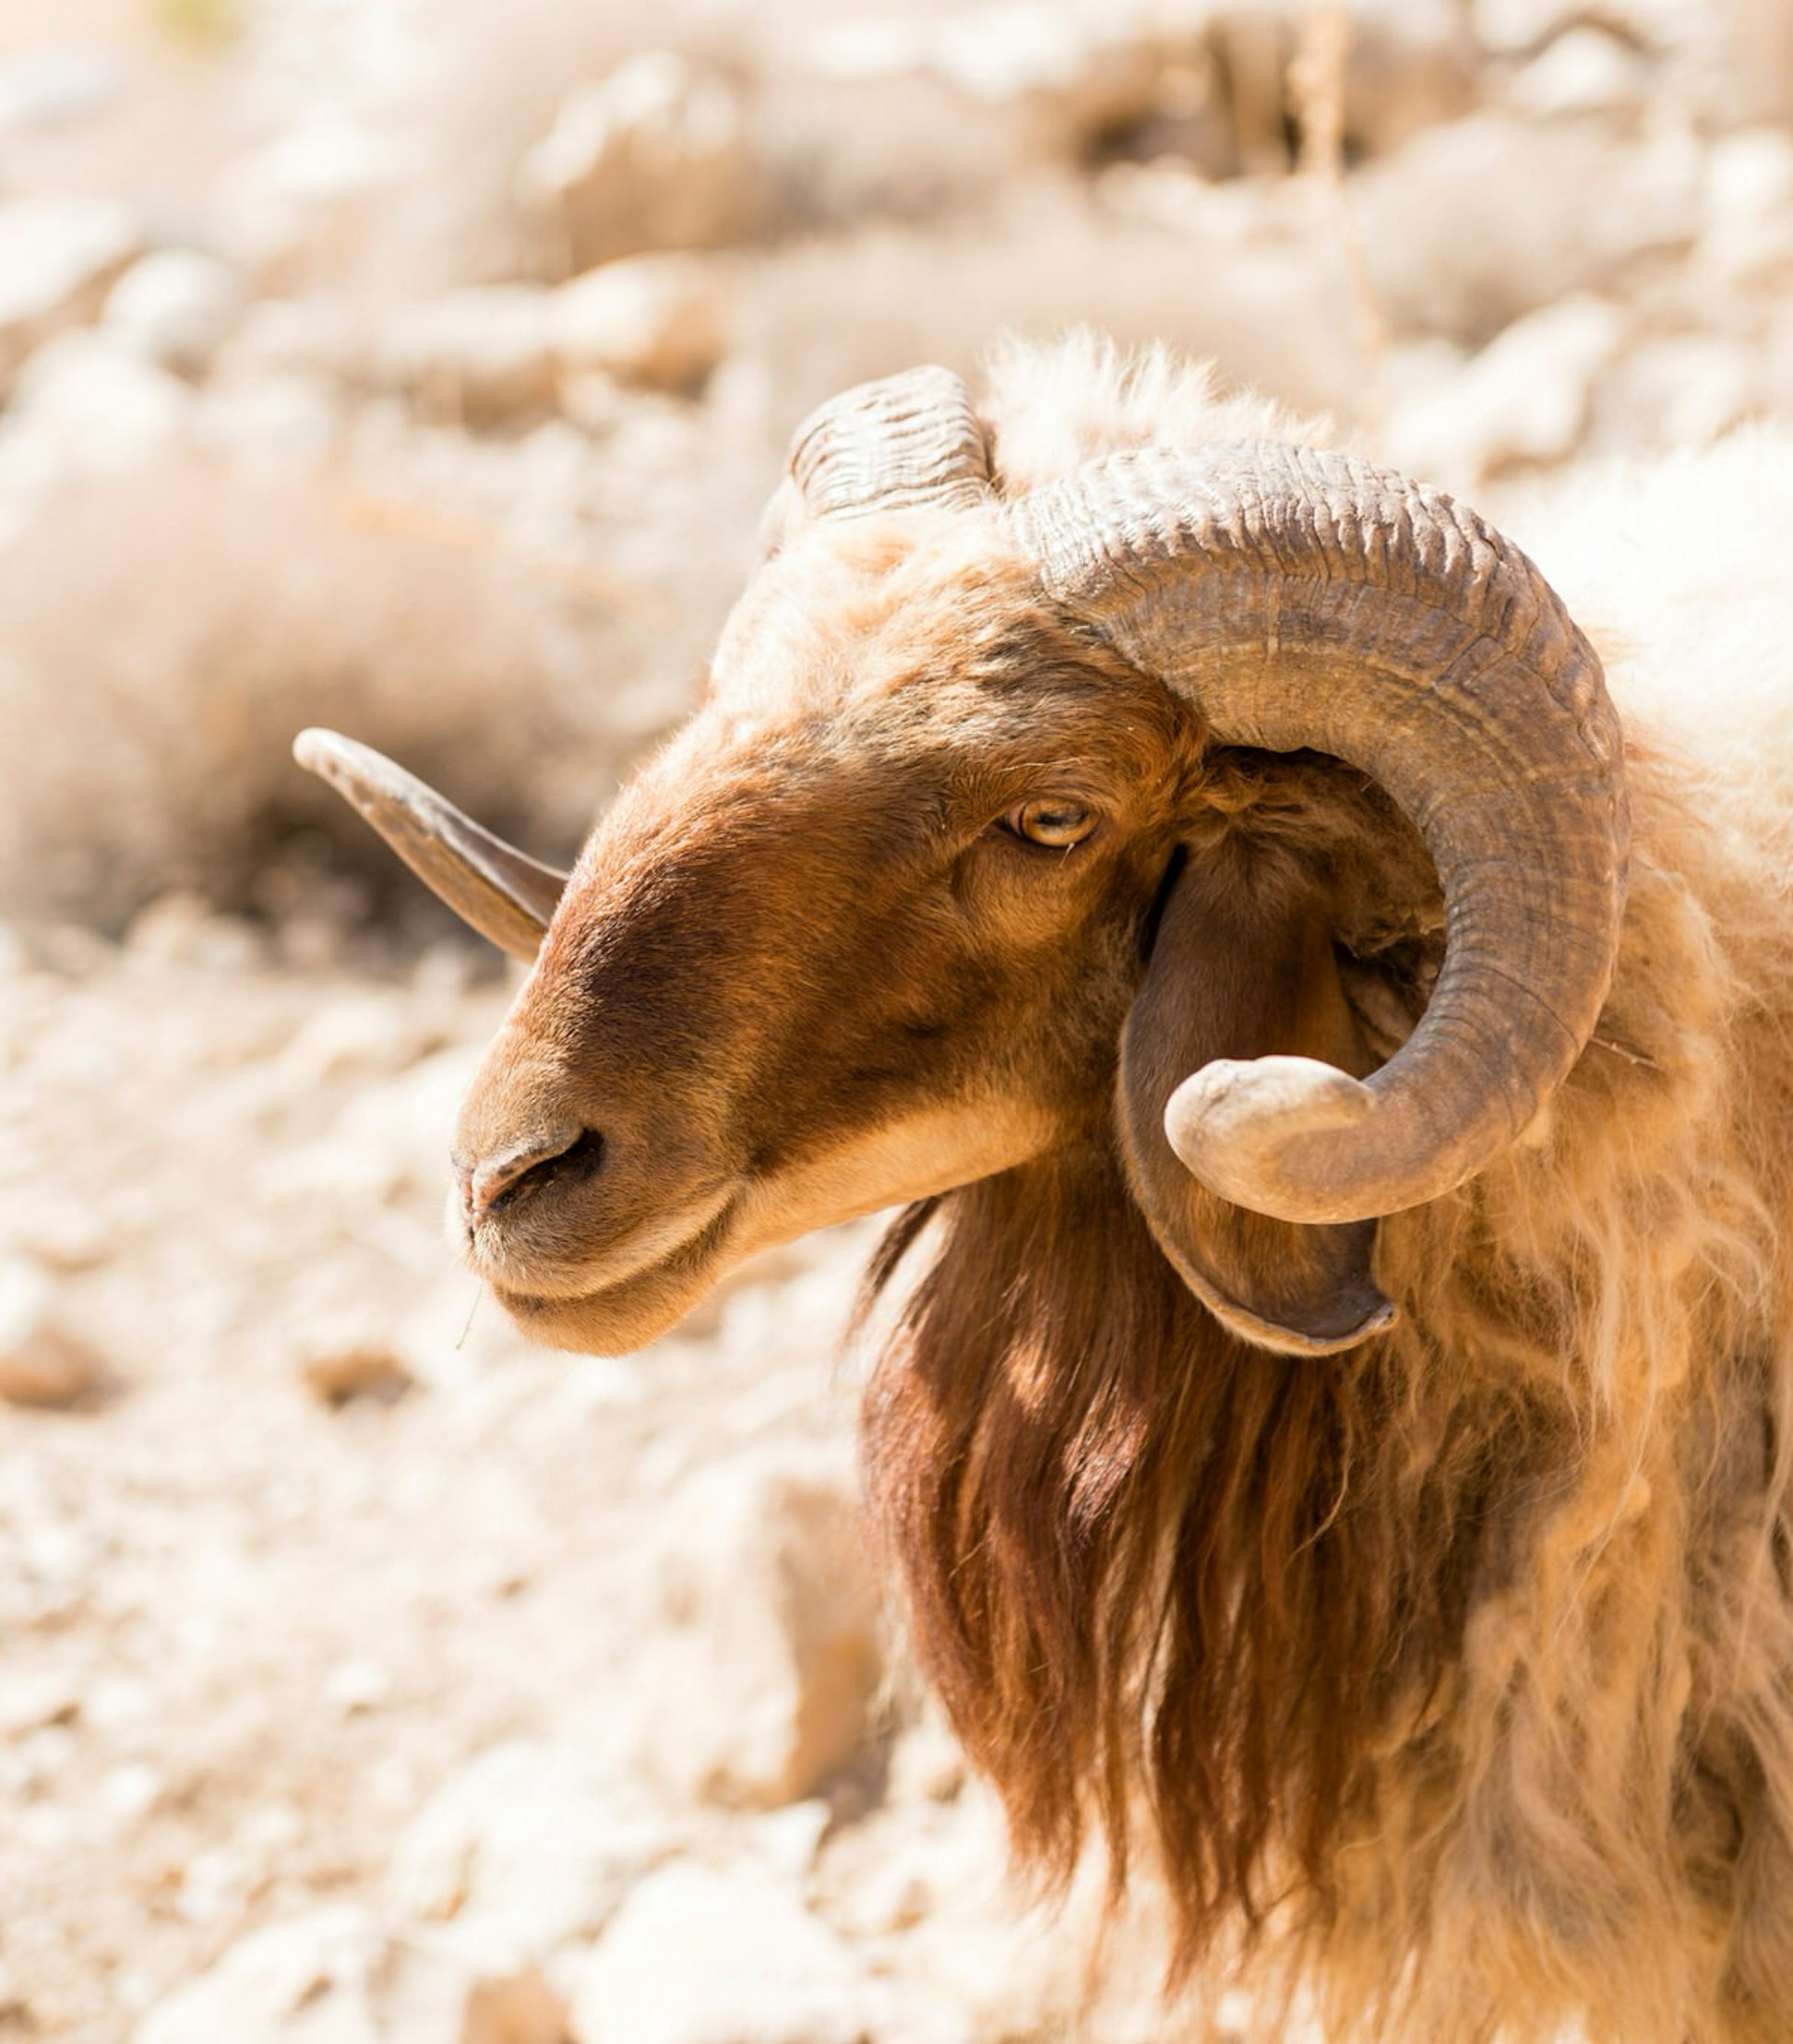 A beady-eyed awassi sheep in Wadi Dana